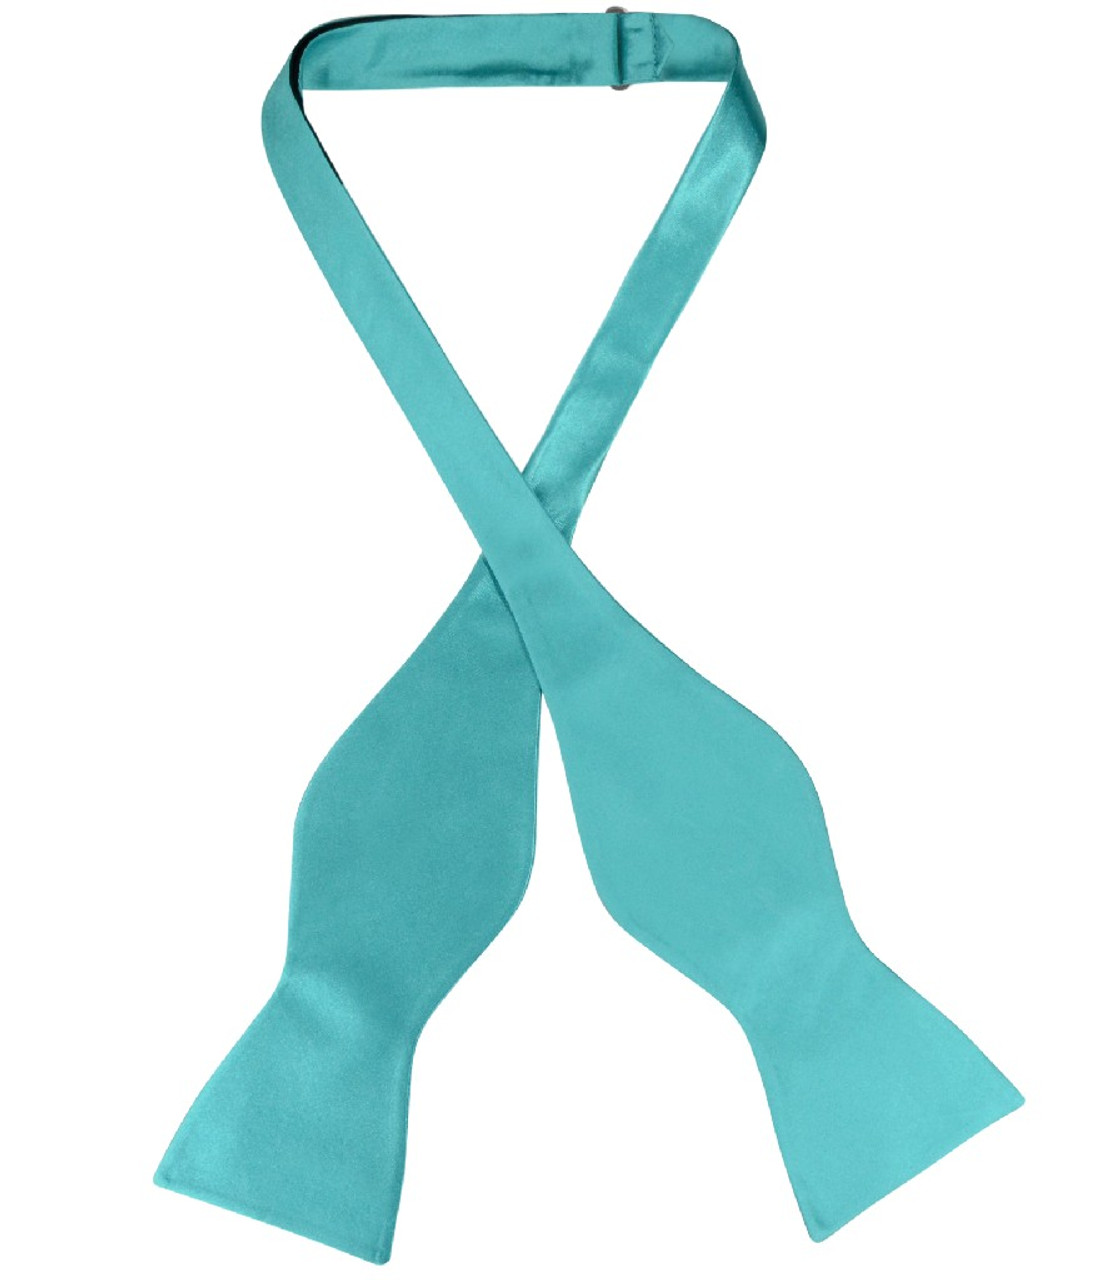 Biagio Self Tie Bow Tie Solid Turquoise Aqua Blue Color Mens BowTie